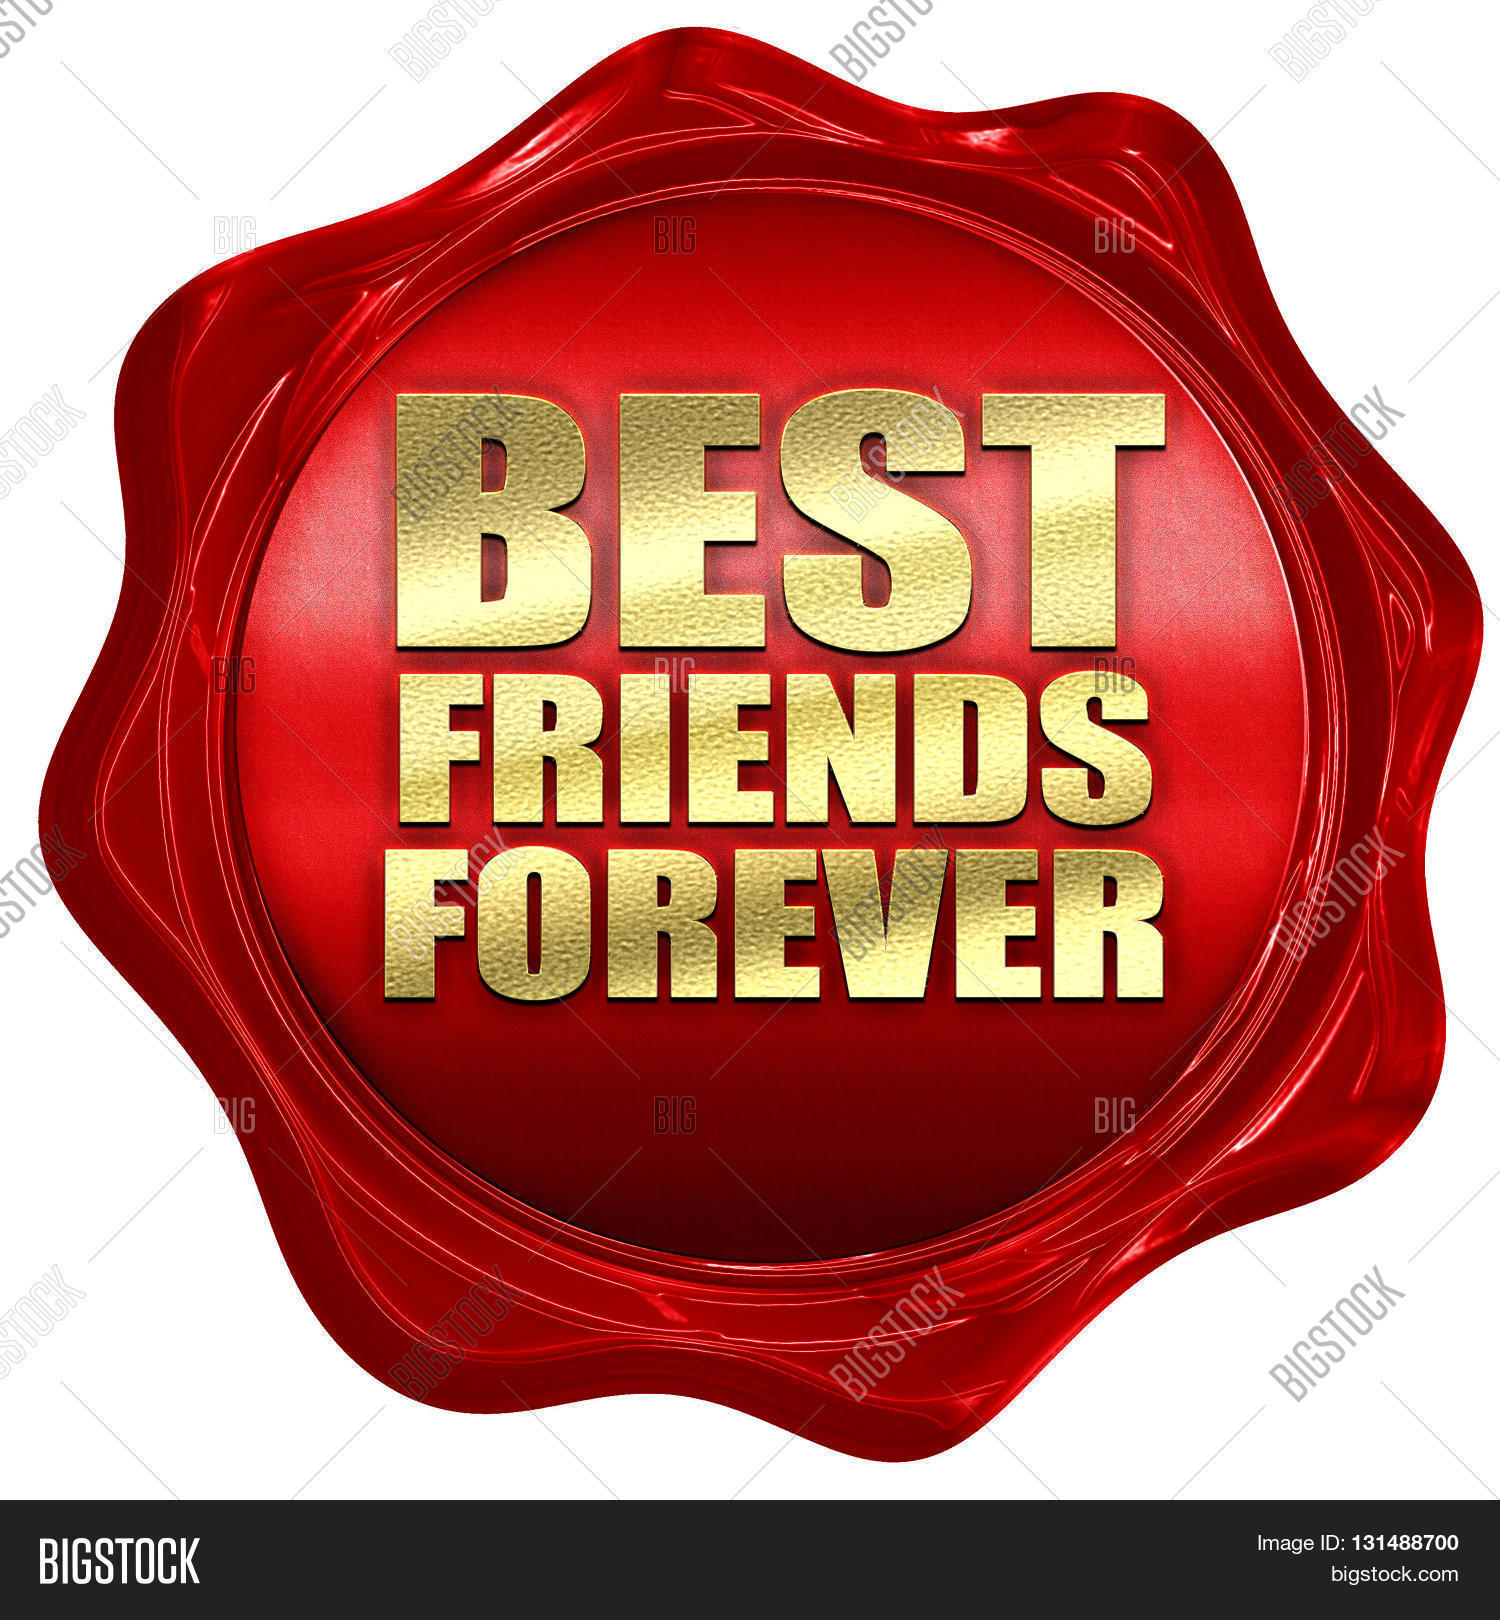 Best Friends Forever, 3D Rendering Image & Photo | Bigstock